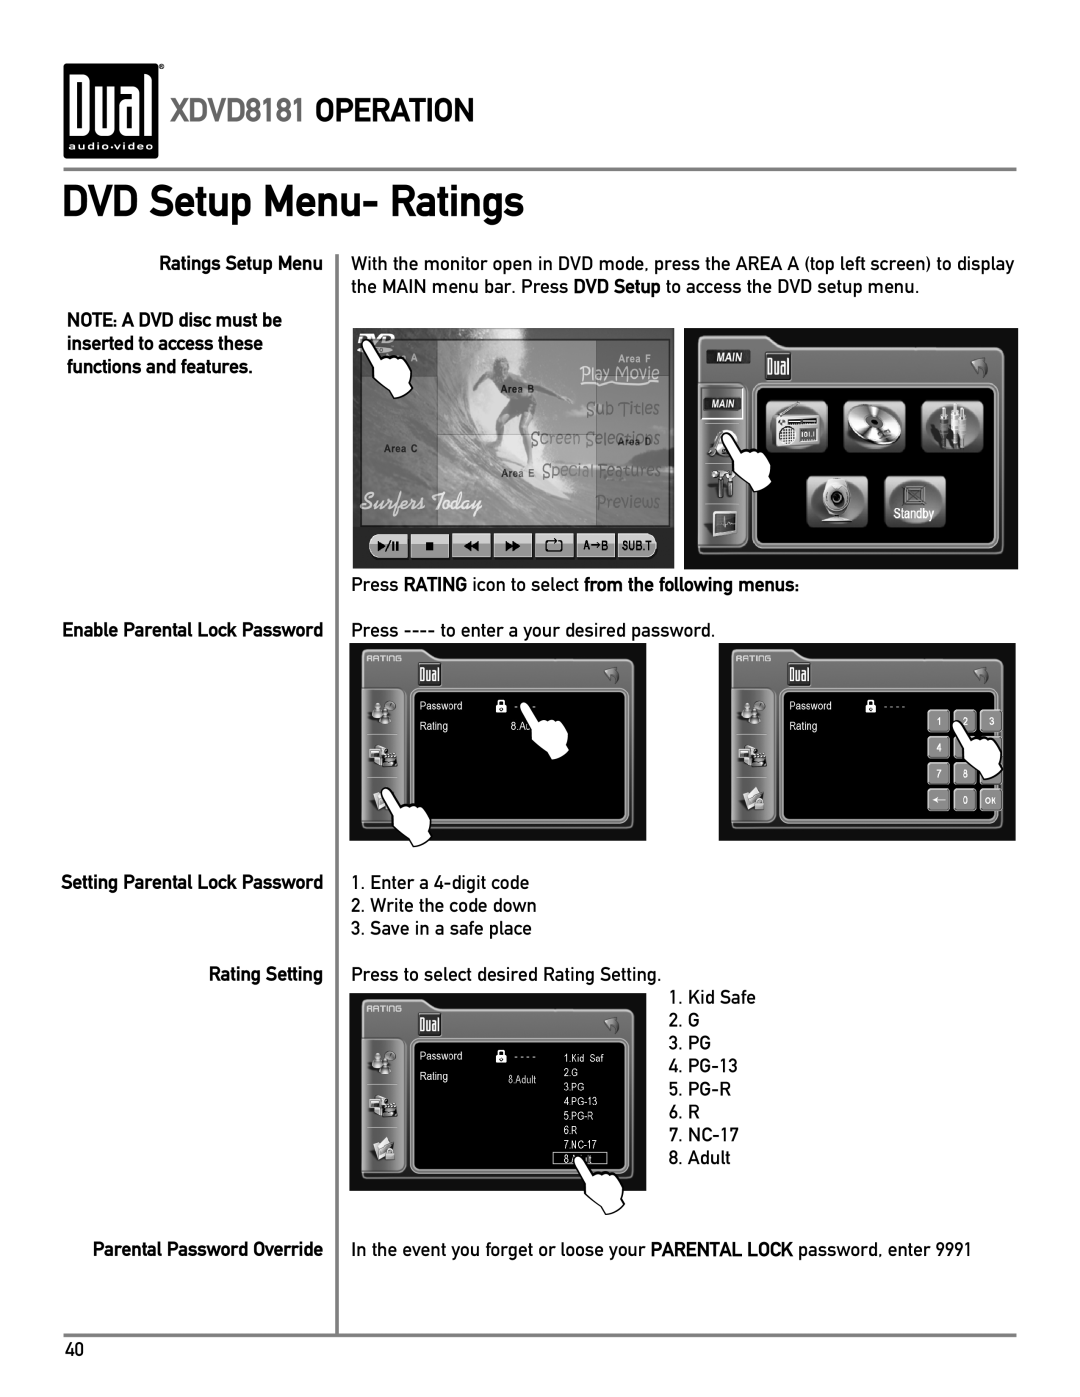 Dual DVD Setup Menu- Ratings, XDVD8181 OPERATION, Ratings Setup Menu, Rating Setting Parental Password Override 